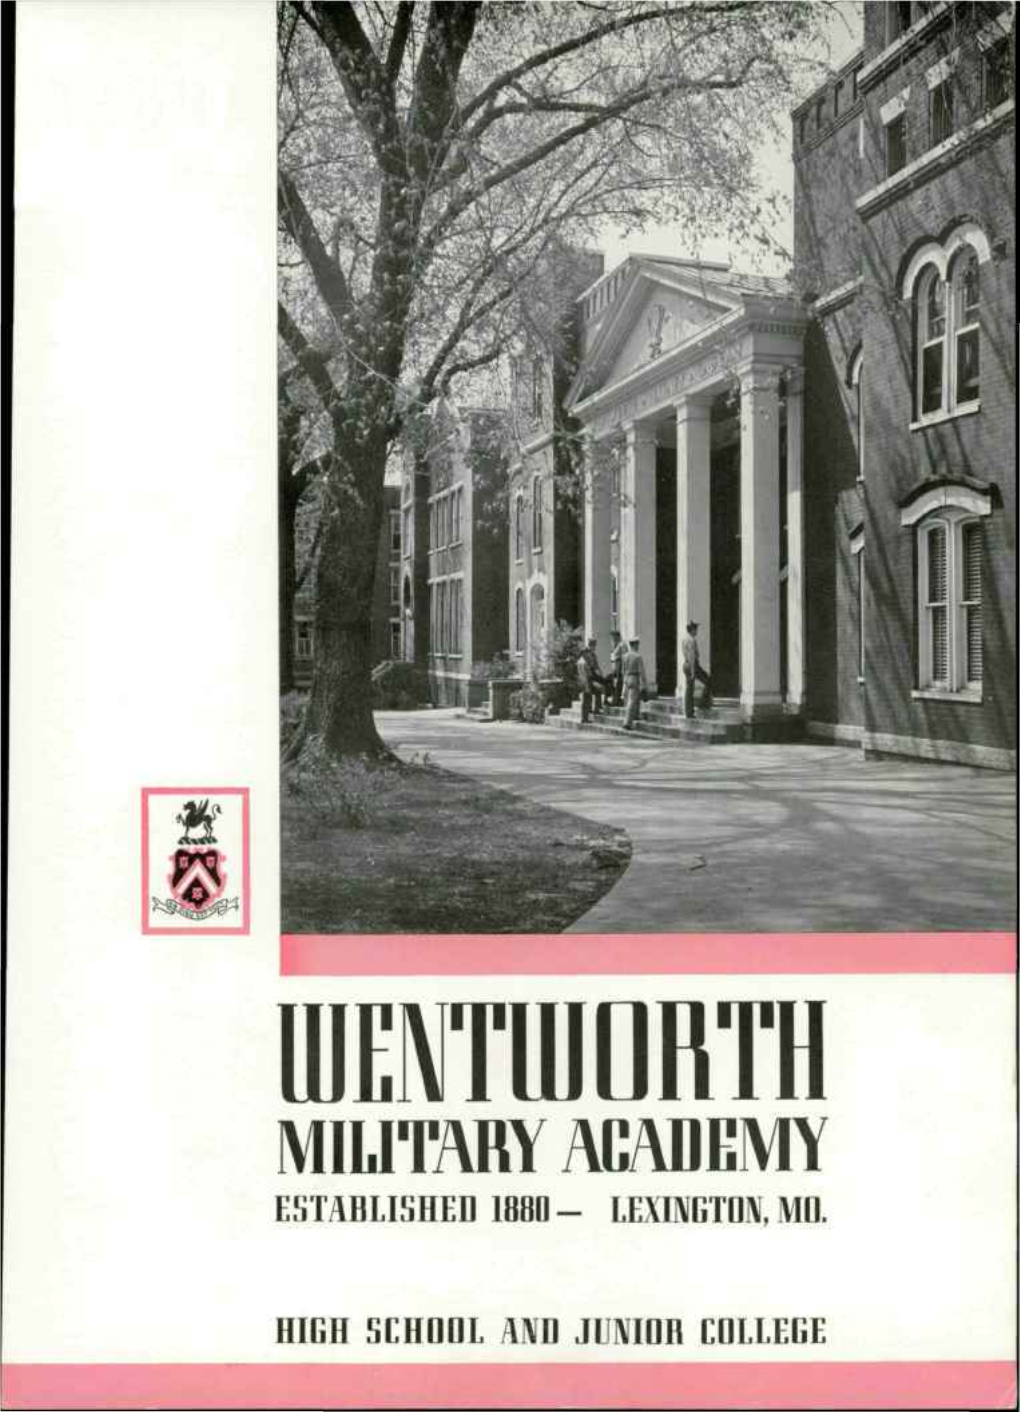 Military Academy Established 1880 - Lexiivgtdiv, Mo